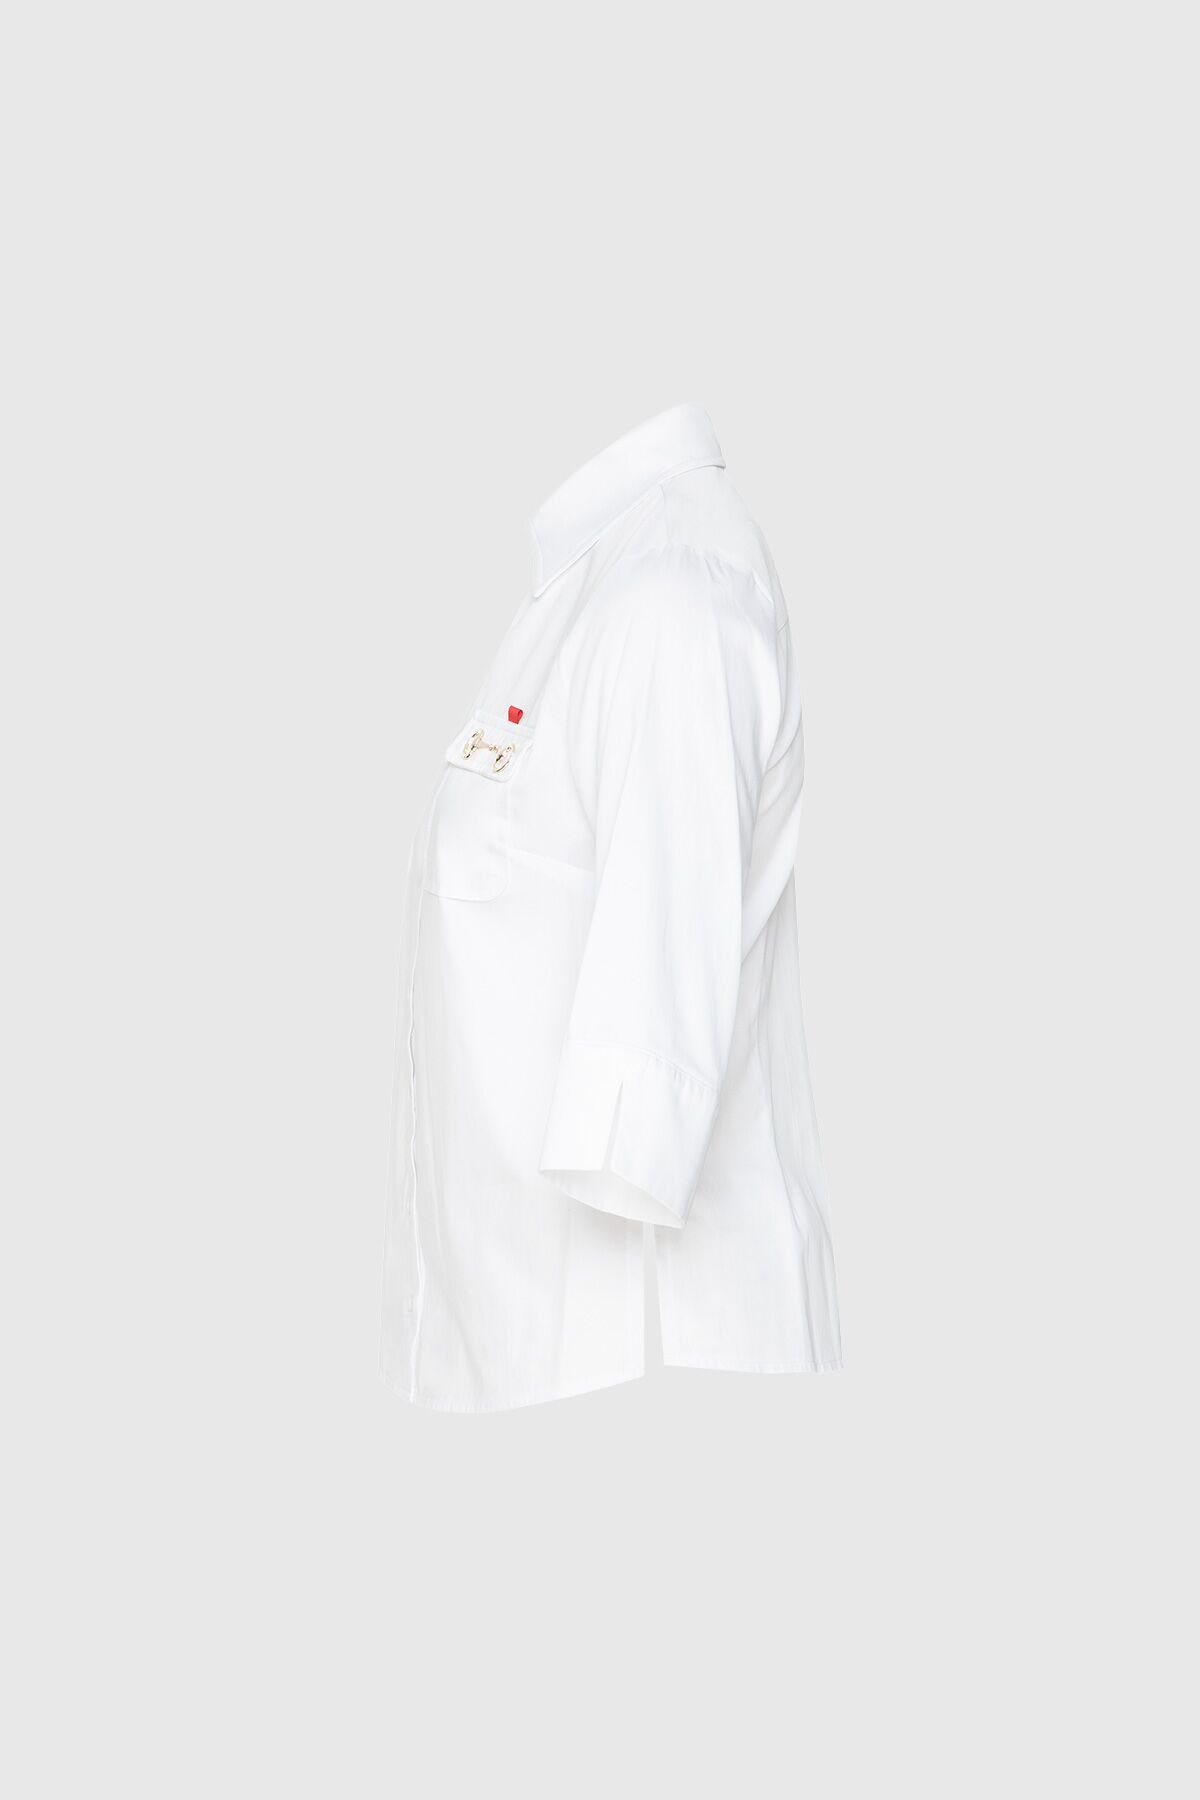 Pocket Detailed White Shirt